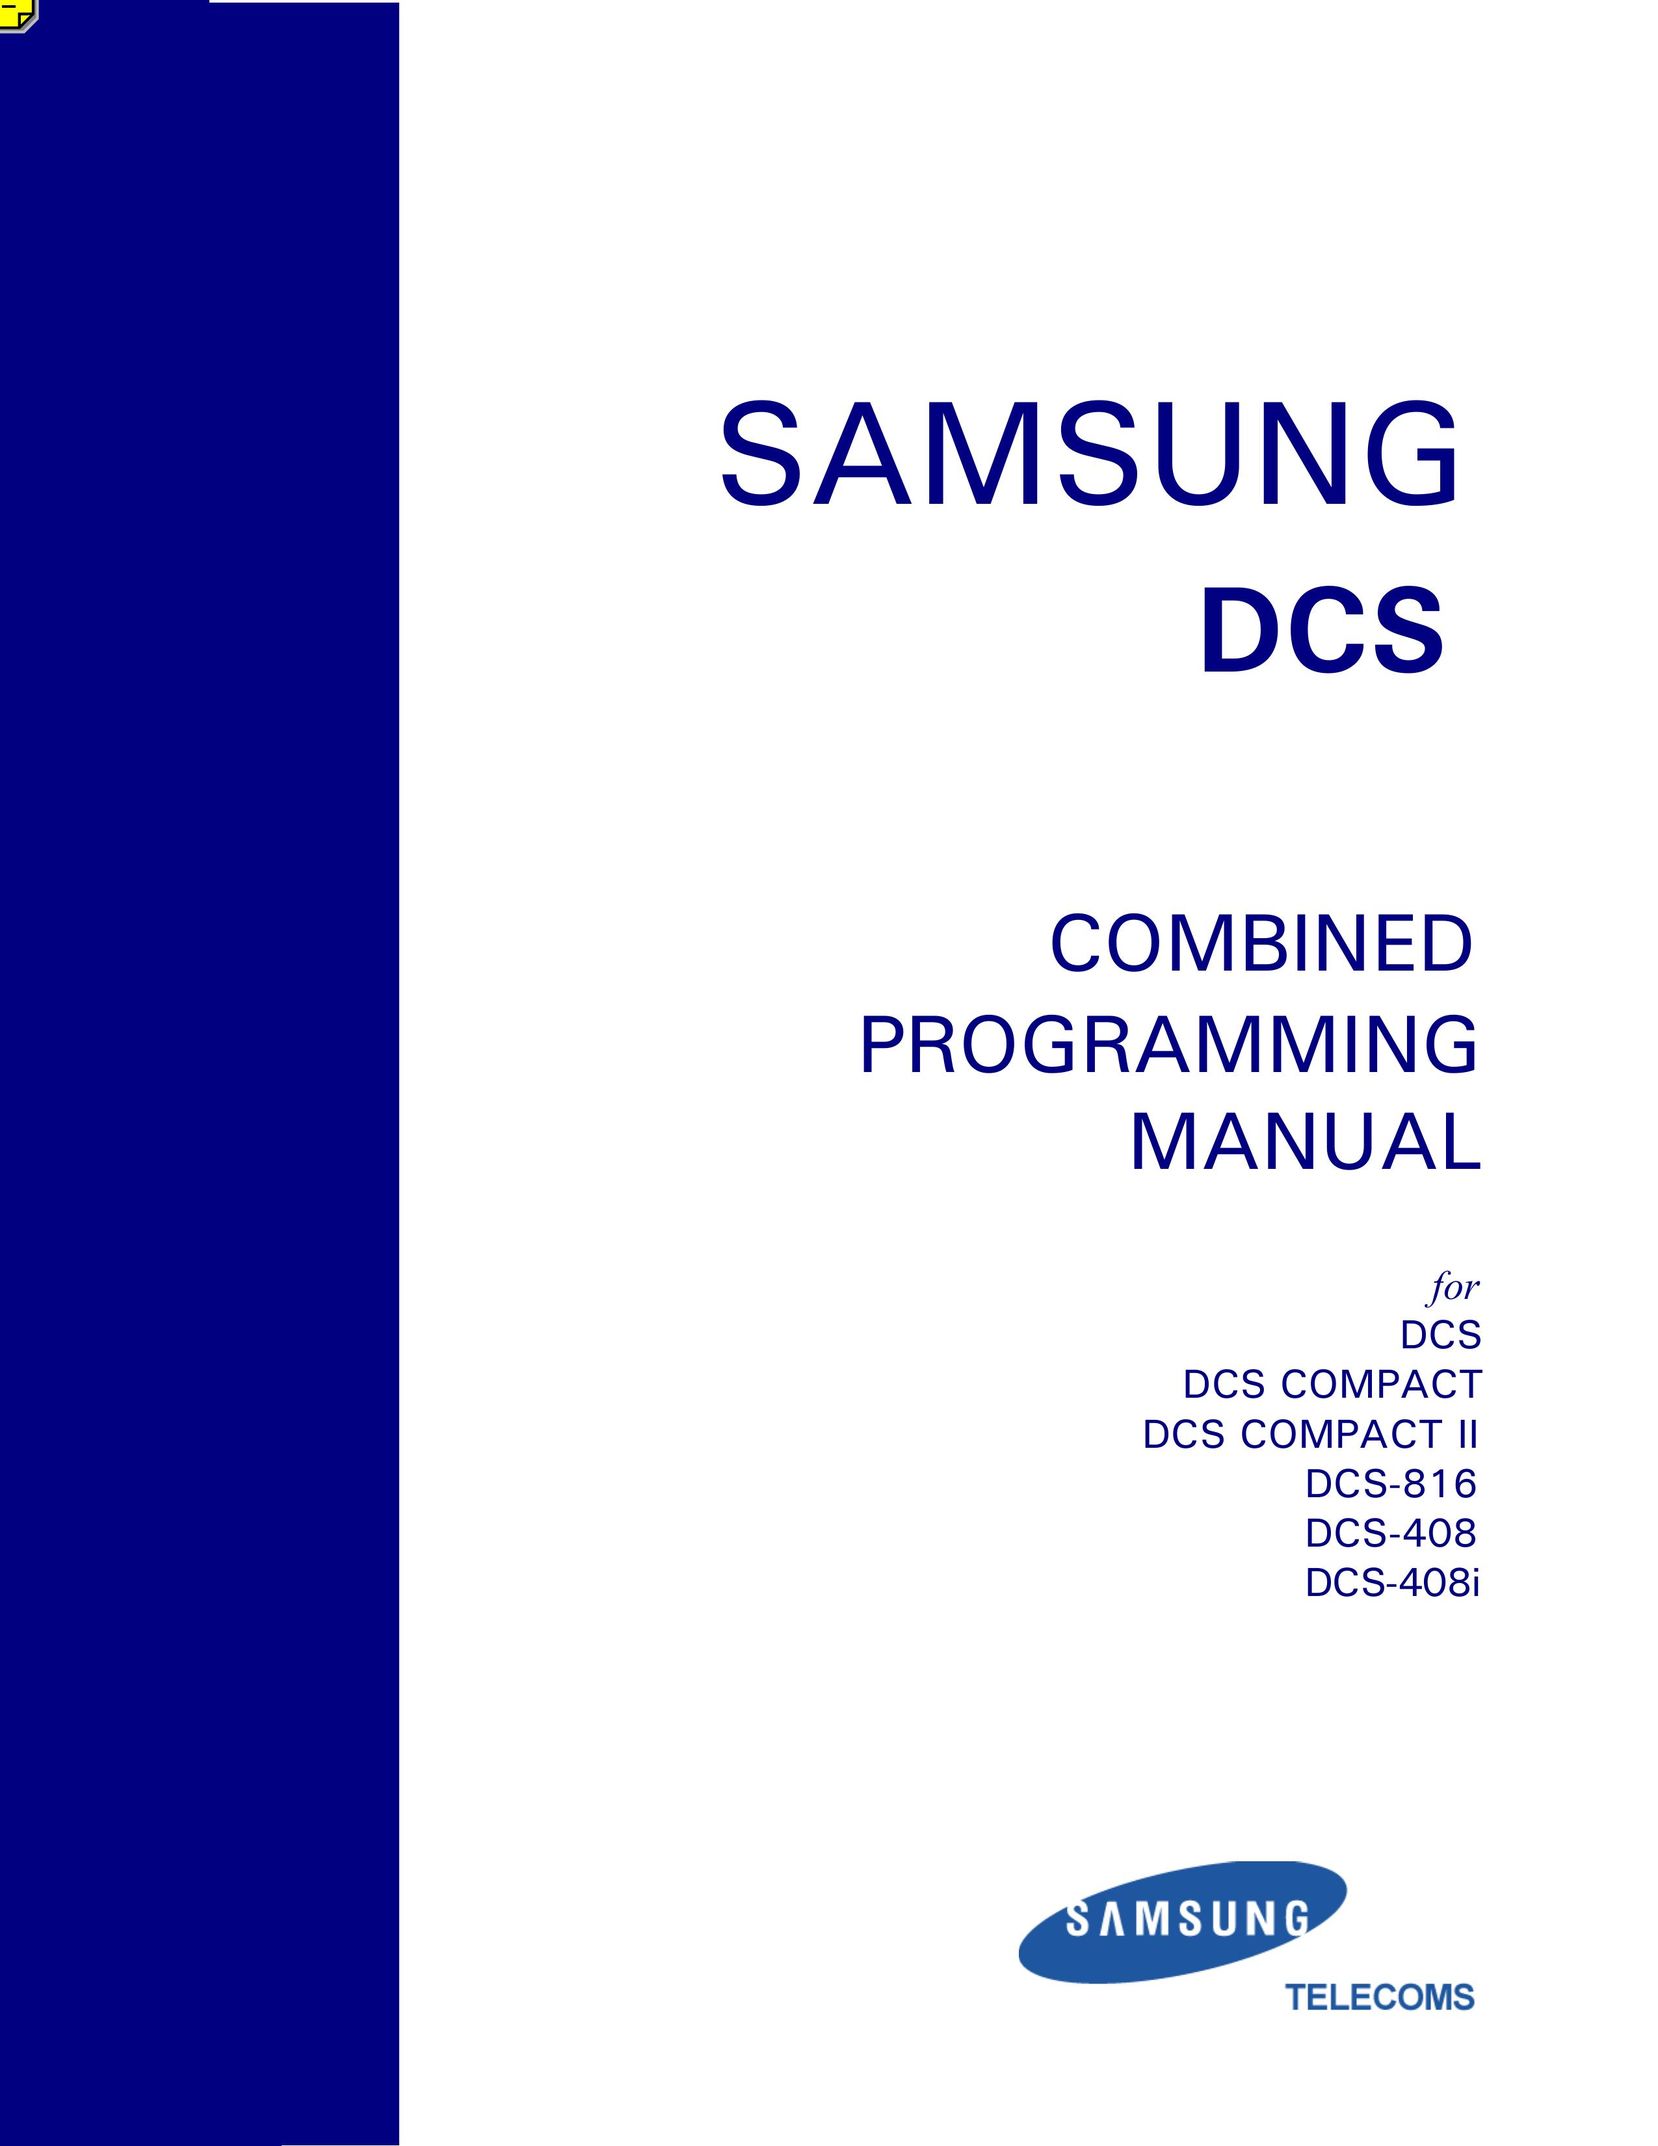 Samsung DCS-408I Telephone User Manual